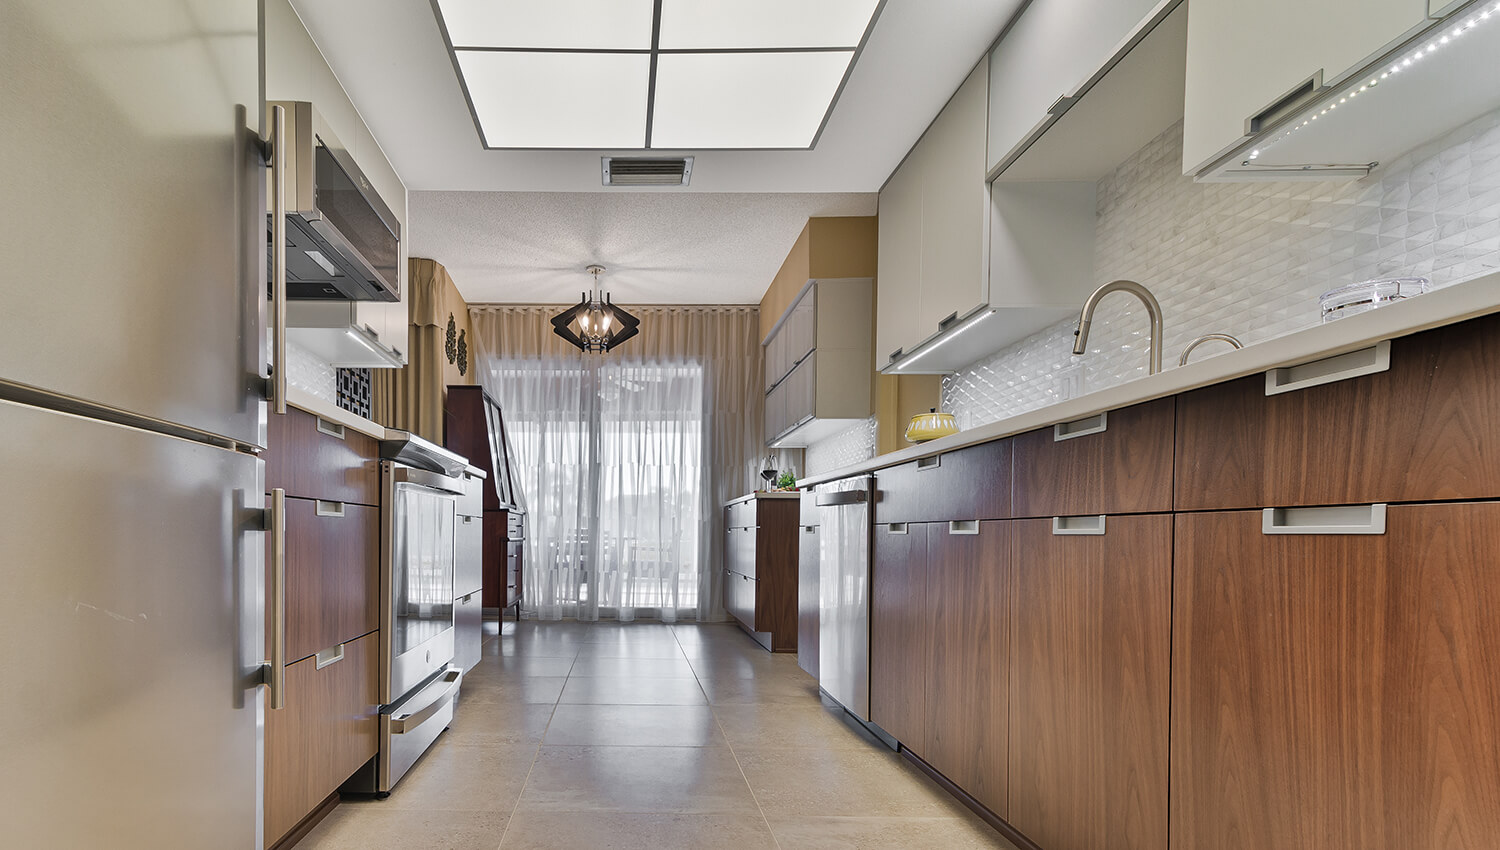 A galley kitchen design with mid-century modern style kitchen cabinets.